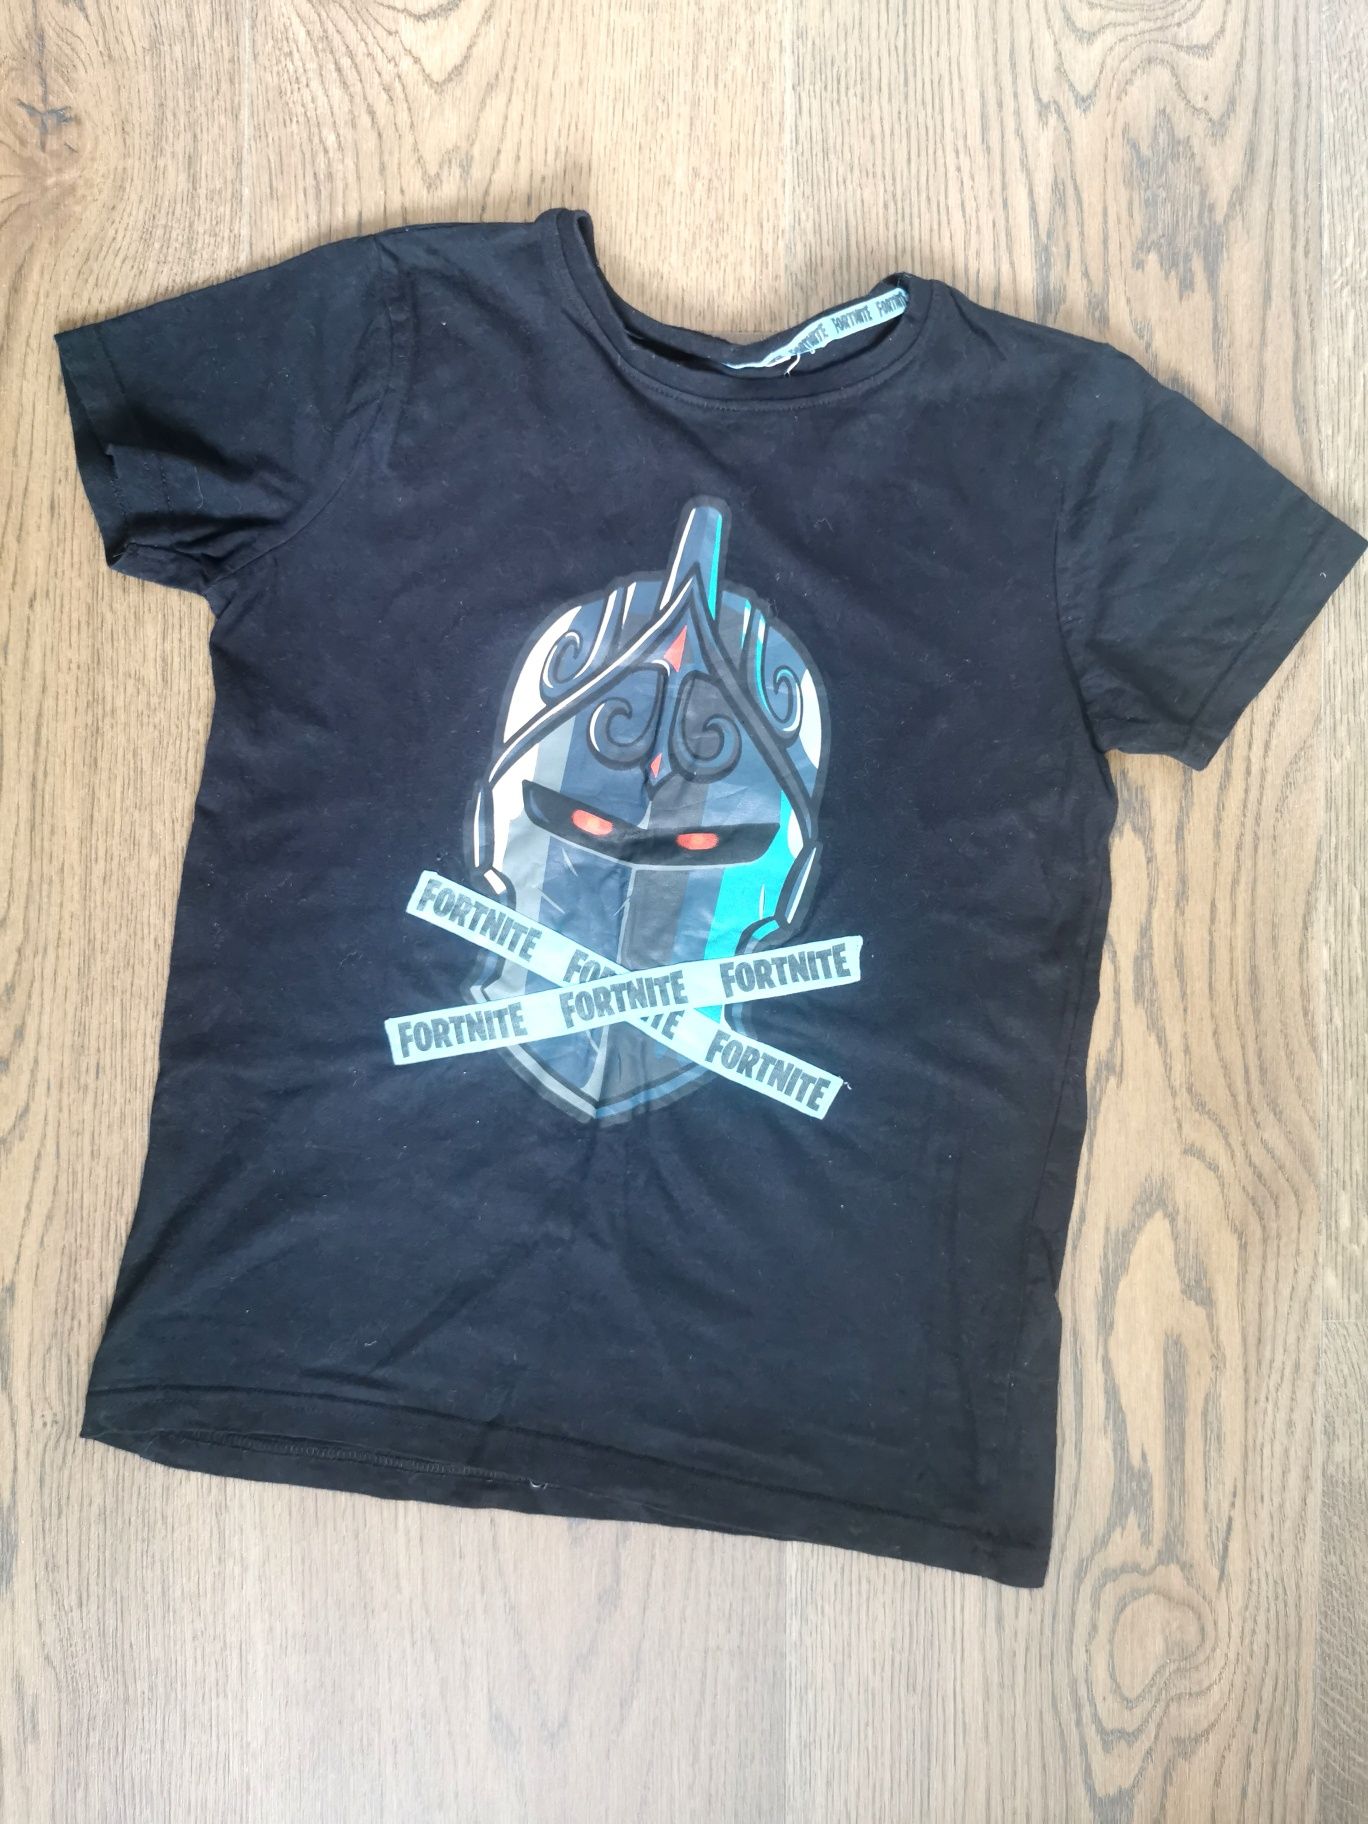 Czarna koszula t-shirt Fortnite, rozmiar M